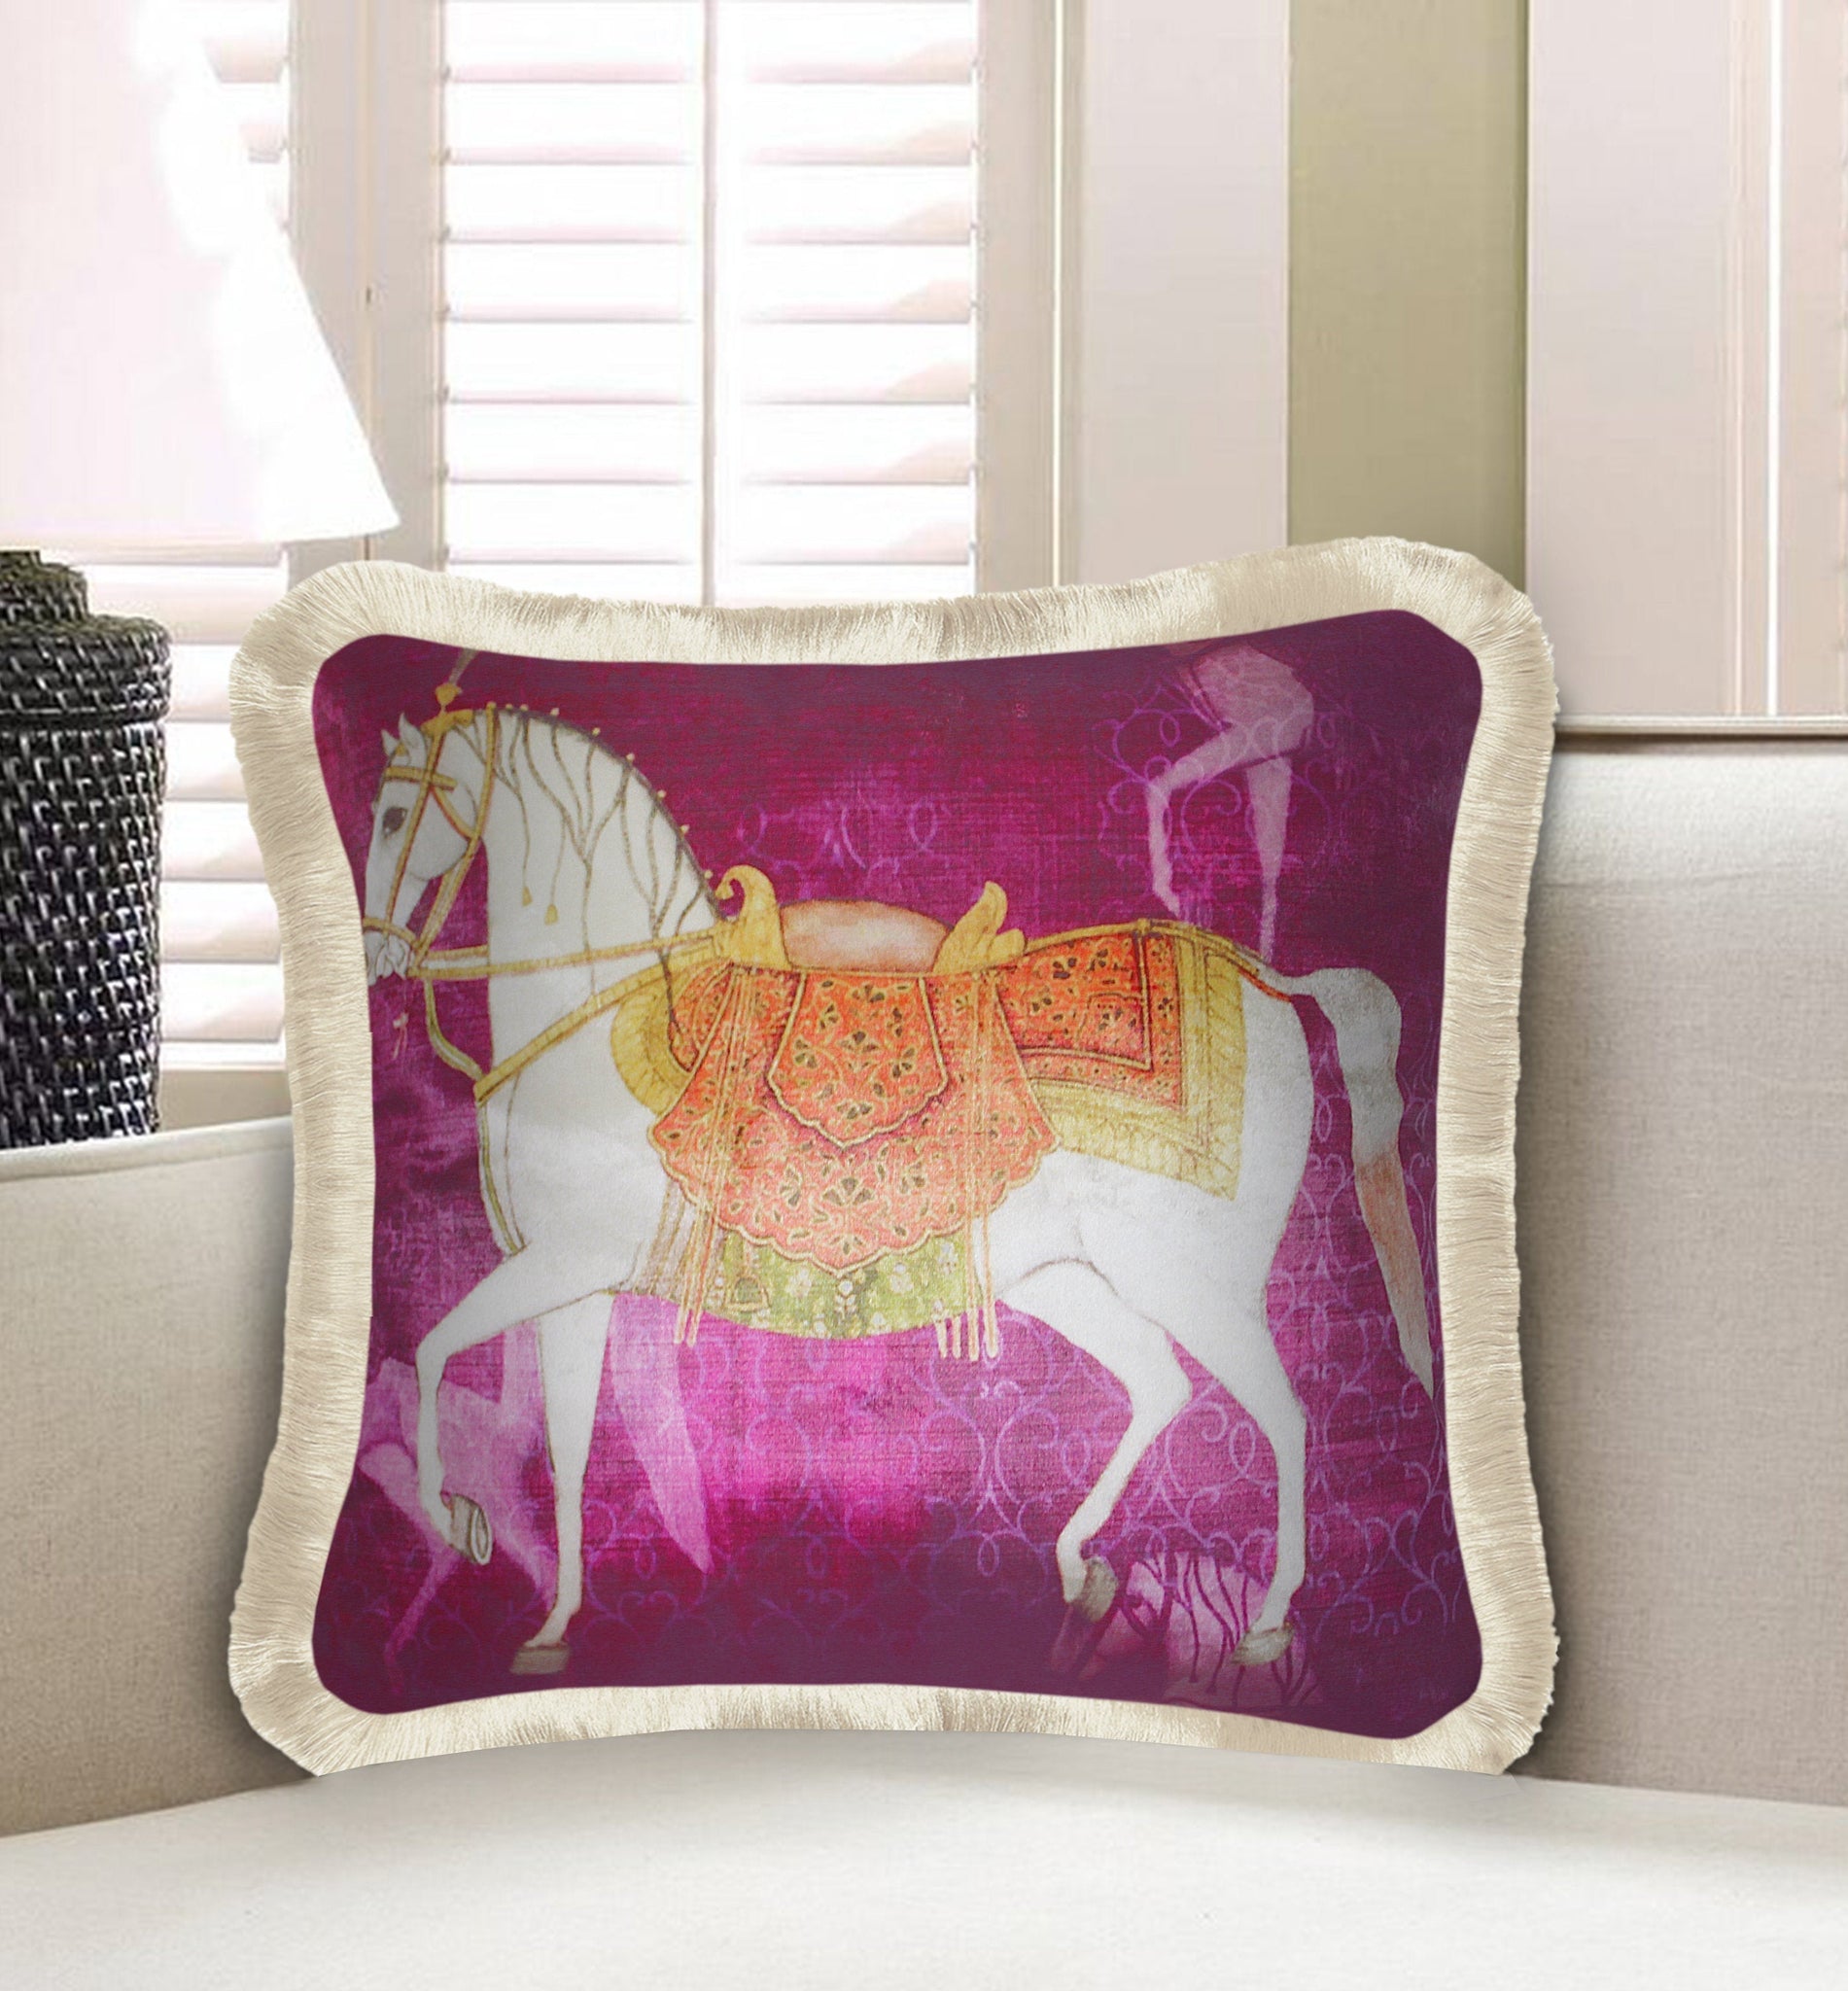  Velvet Cushion Cover Baroque Horse Decorative pillowcase Classic Motif Décor Throw Pillow for Sofa Chair Bedroom Living Room Fuchsia 45x45cm (18x18 Inches)